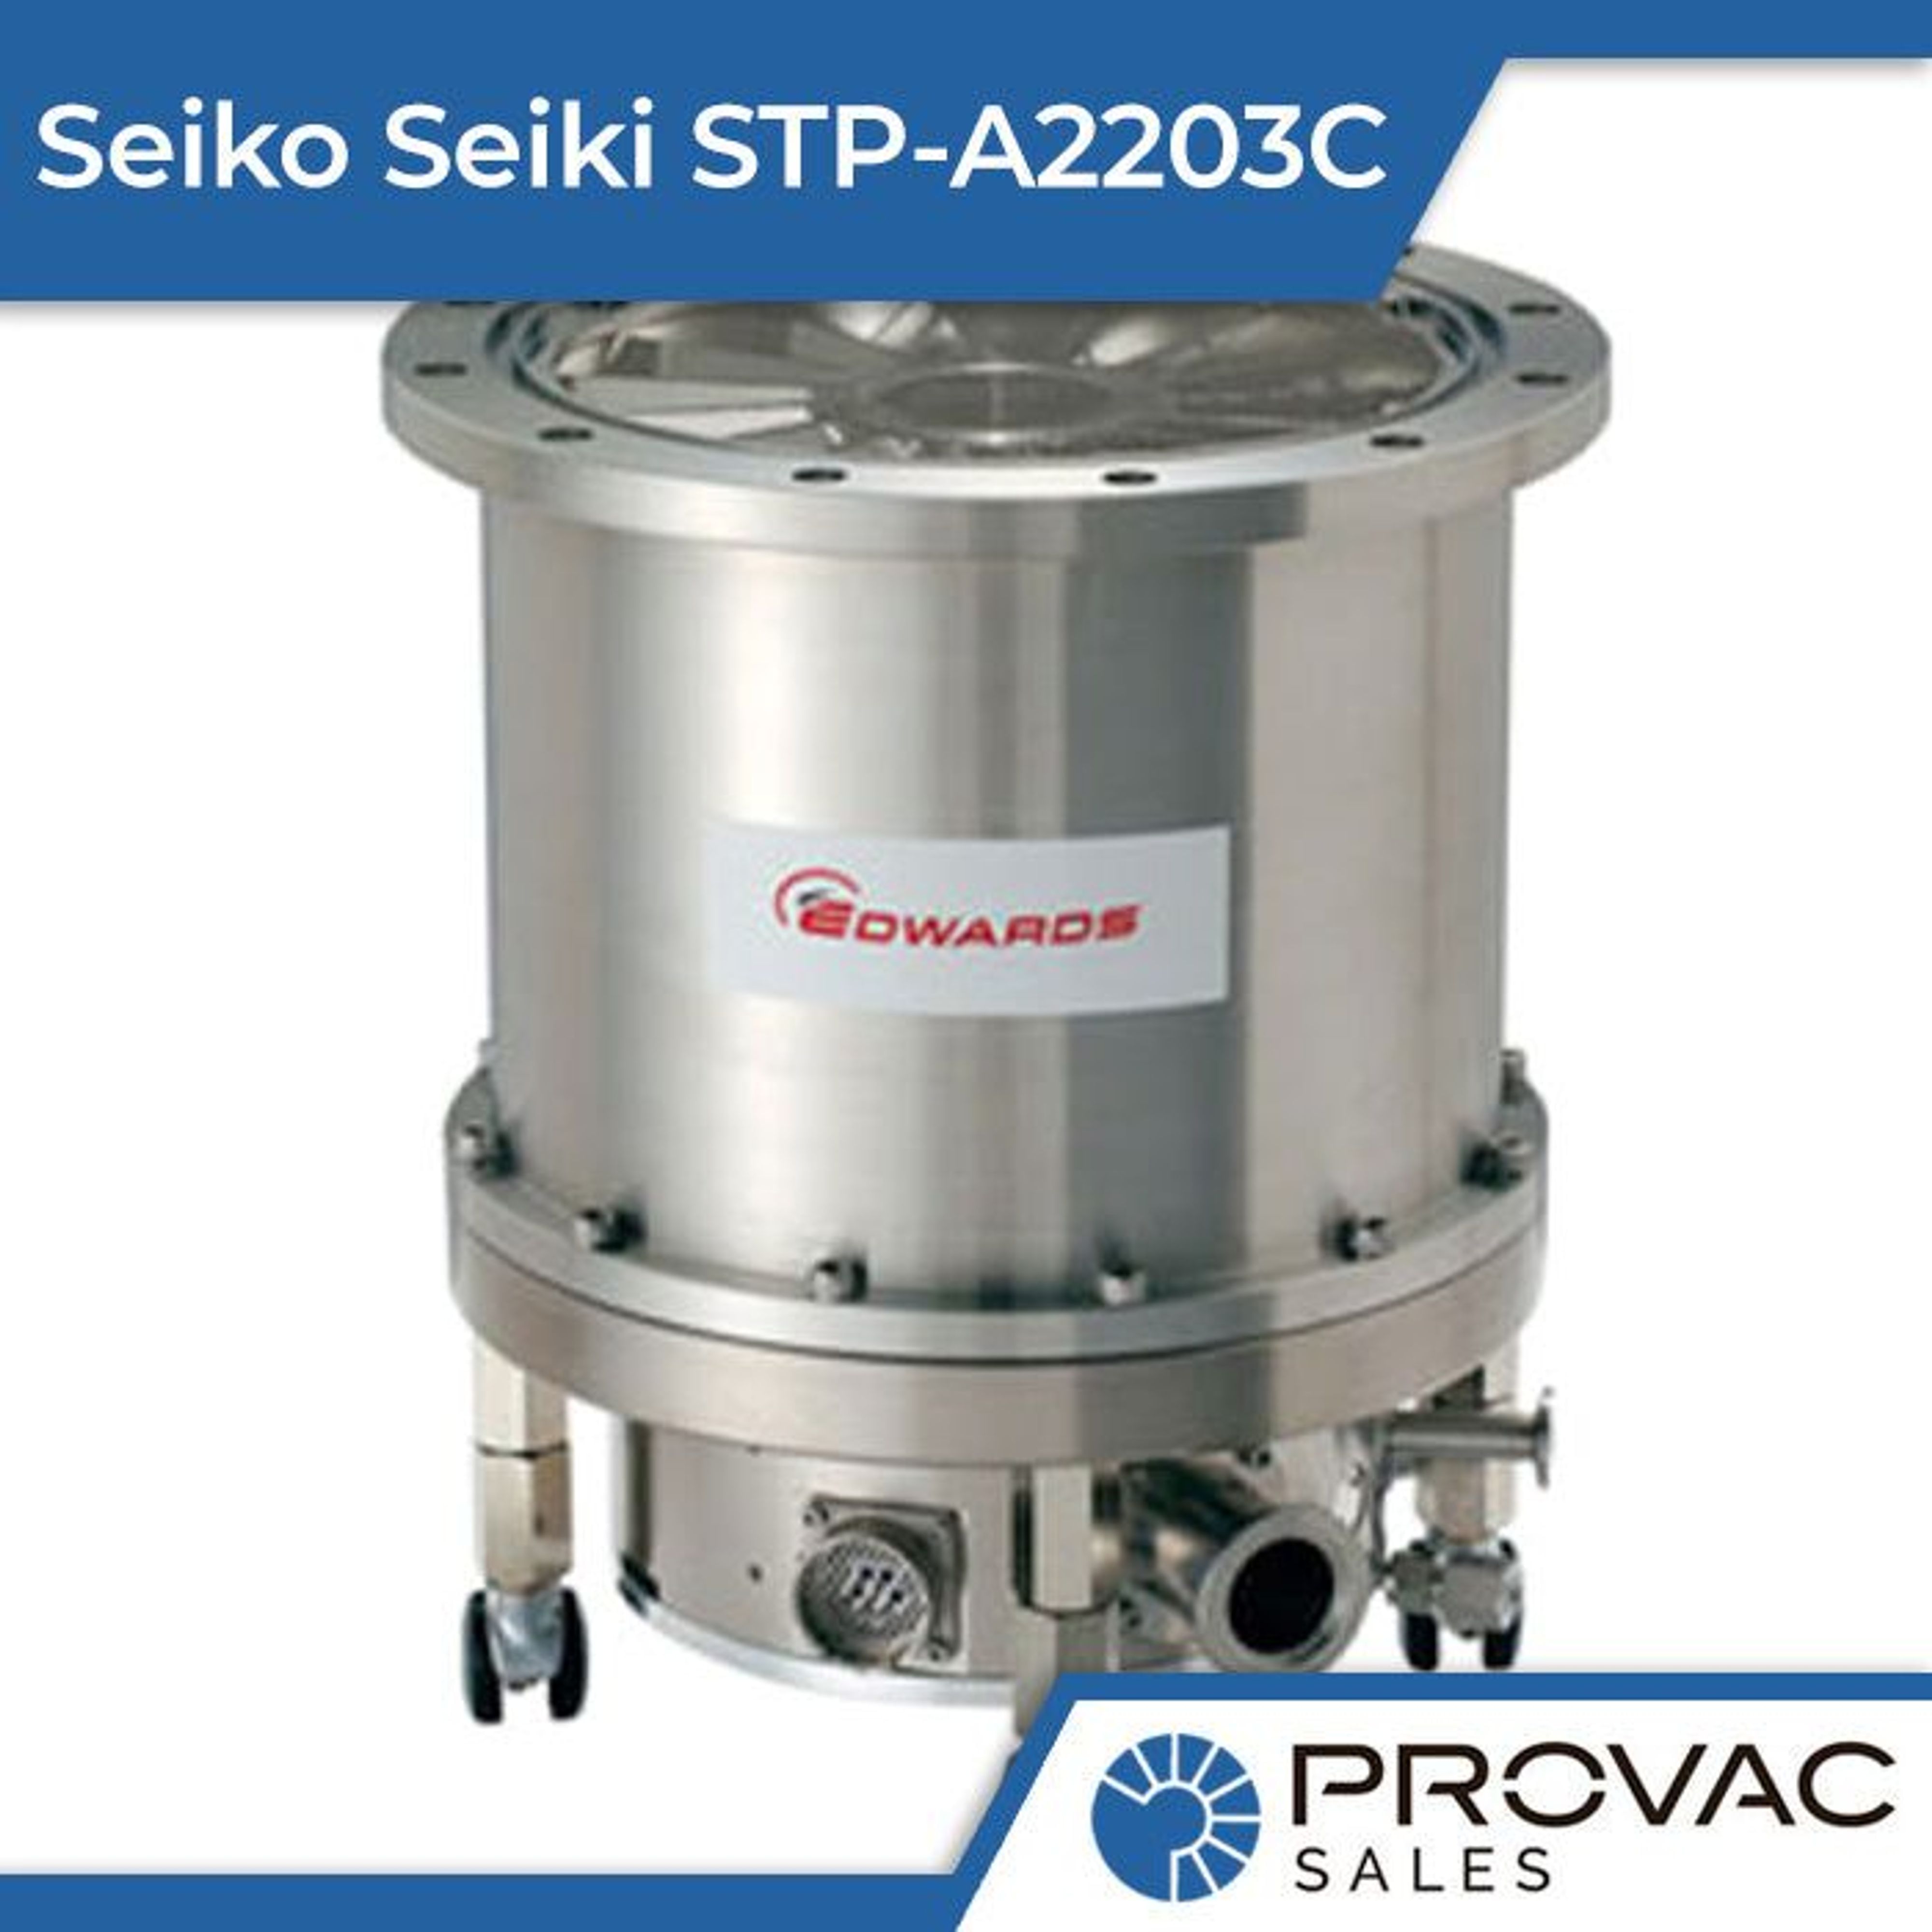 Seiko Seiki STP-A2203C Turbomolecular Pump Background